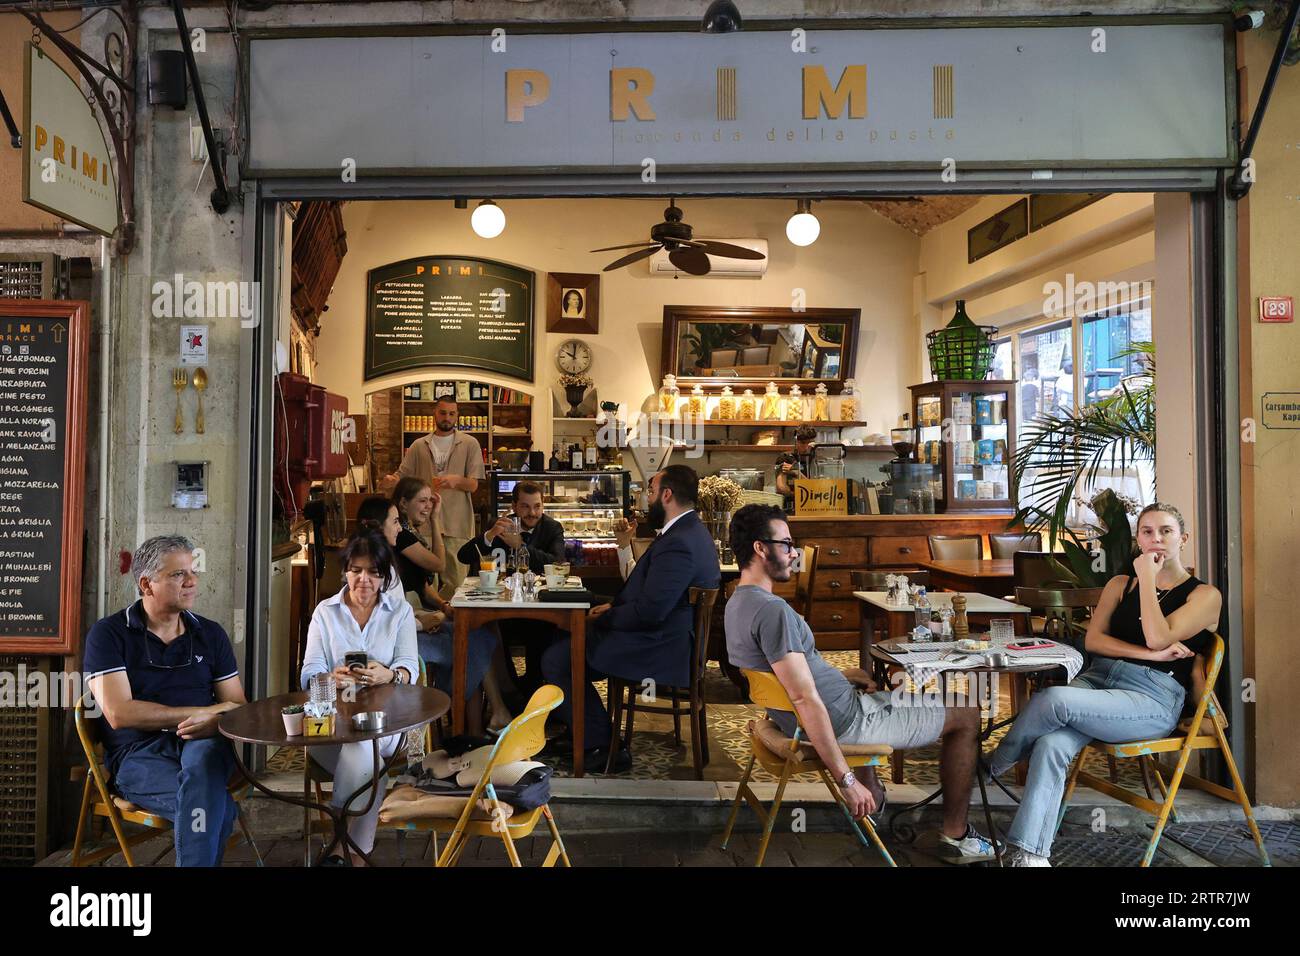 Primi cafe & coffee bar in the Balat district of Istanbul, Turkey Stock Photo